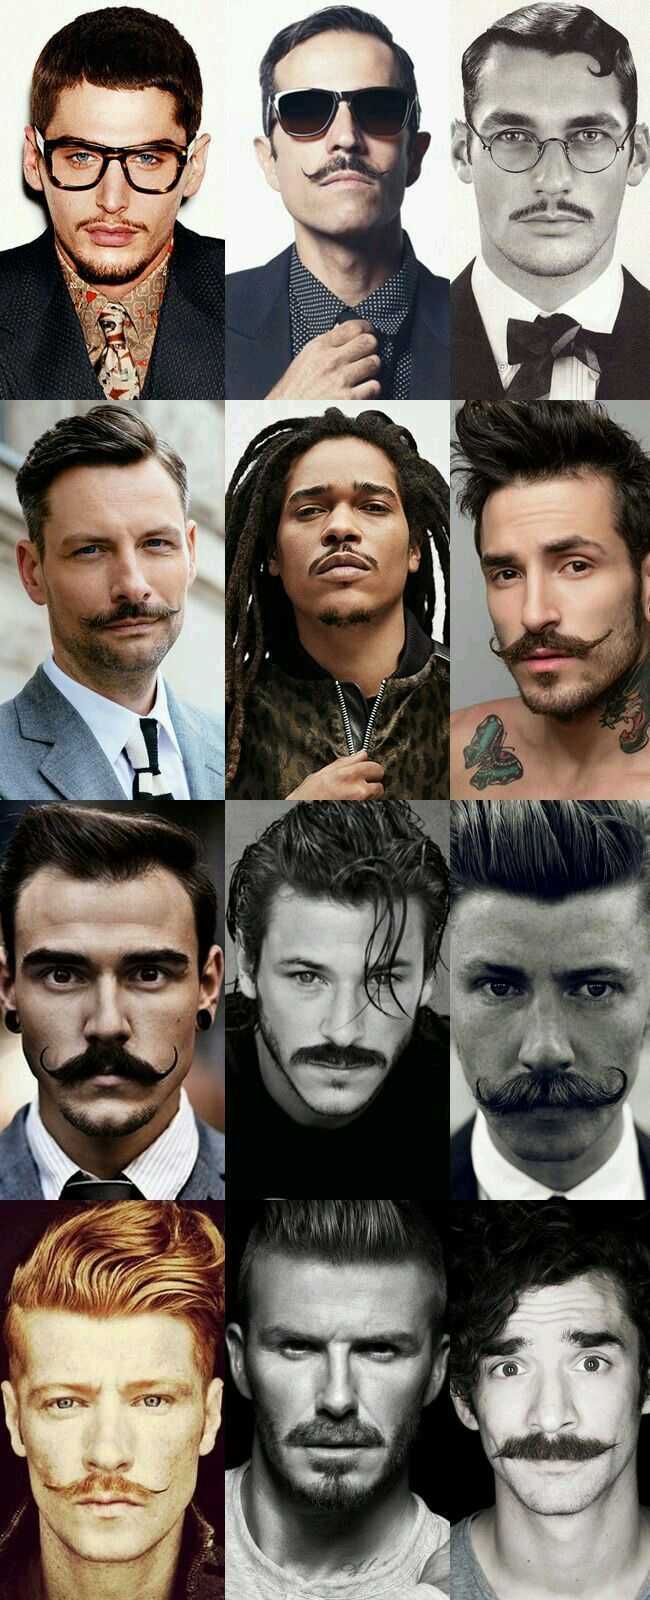 Борода без усов: виды и 15 фото с вариантами бородок для мужчин